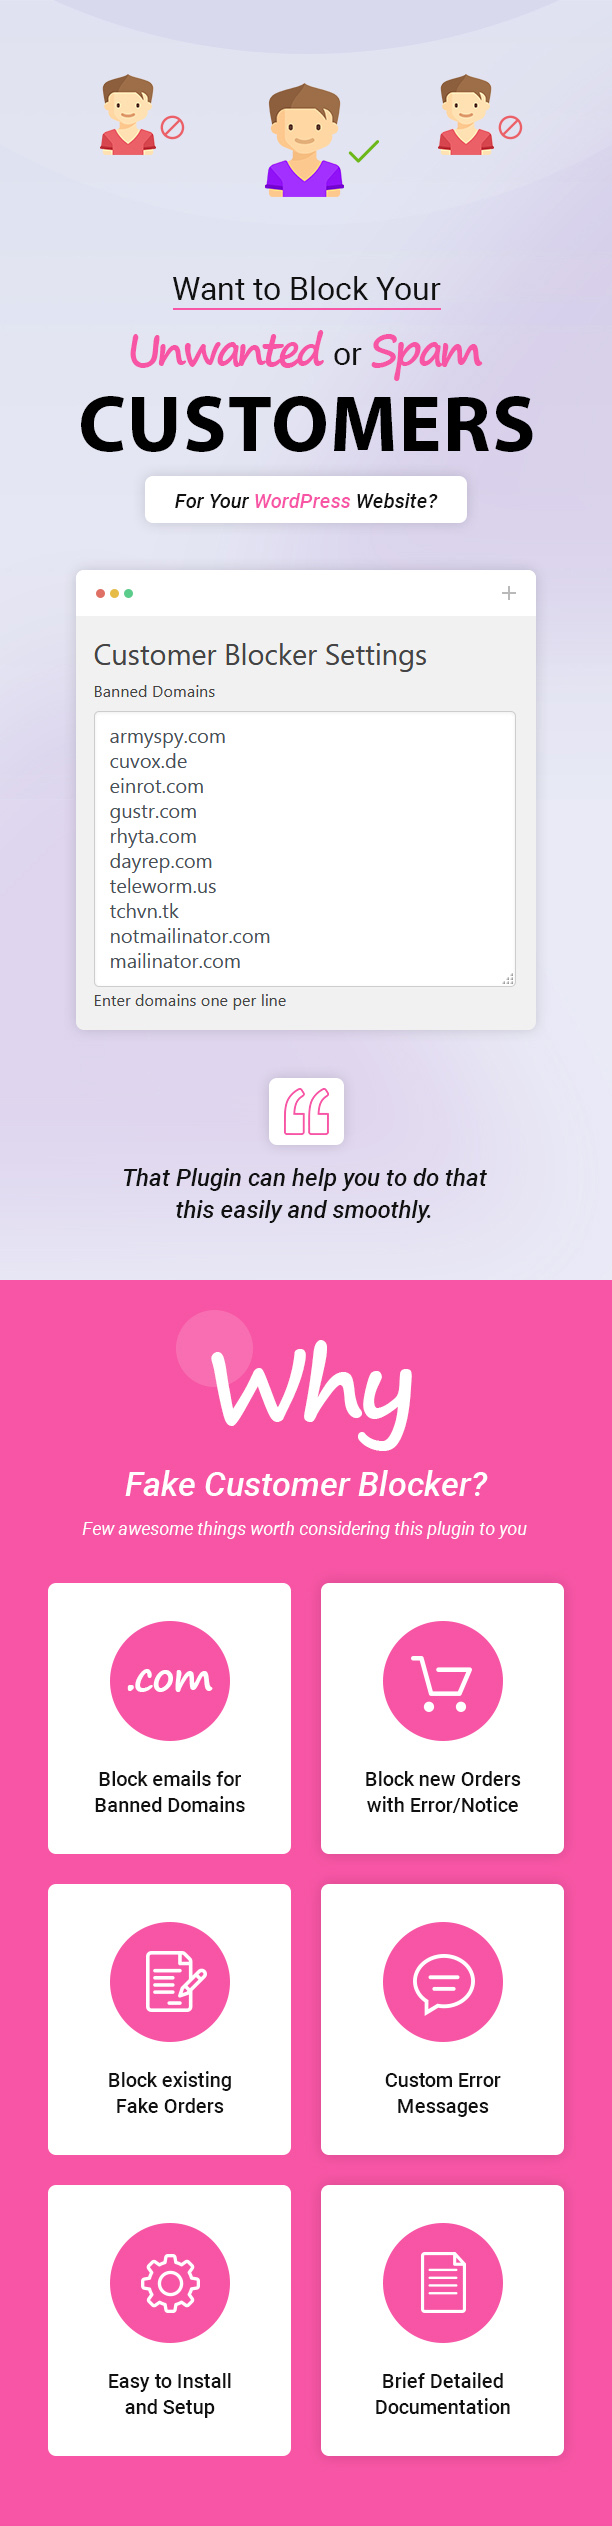 Why Fake Customer Blocker for Your WordPress Website